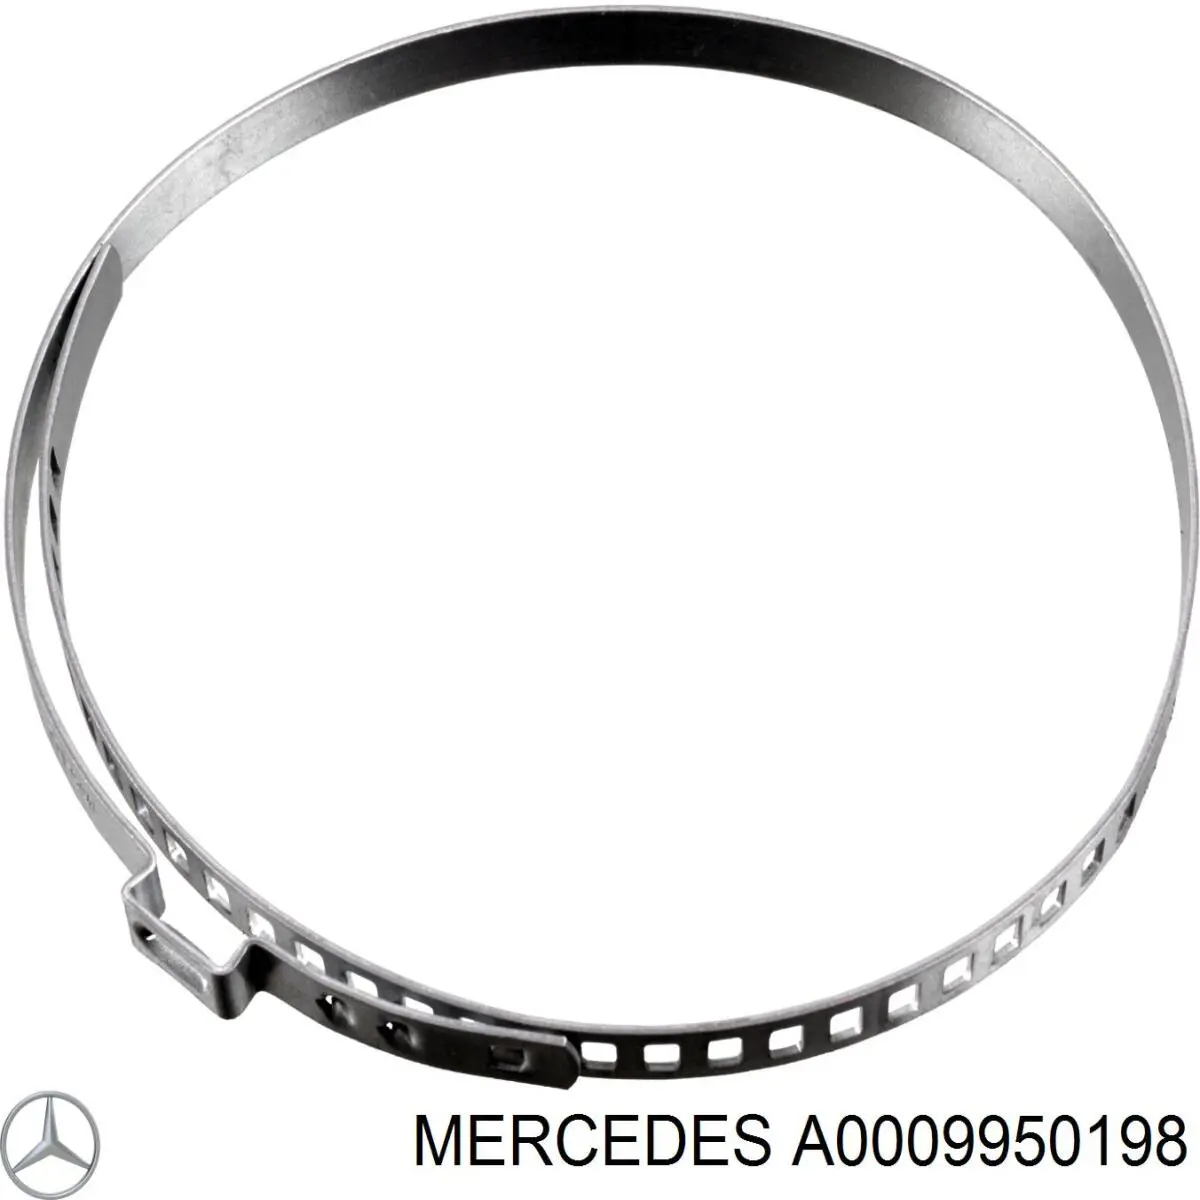 0009950198 Mercedes